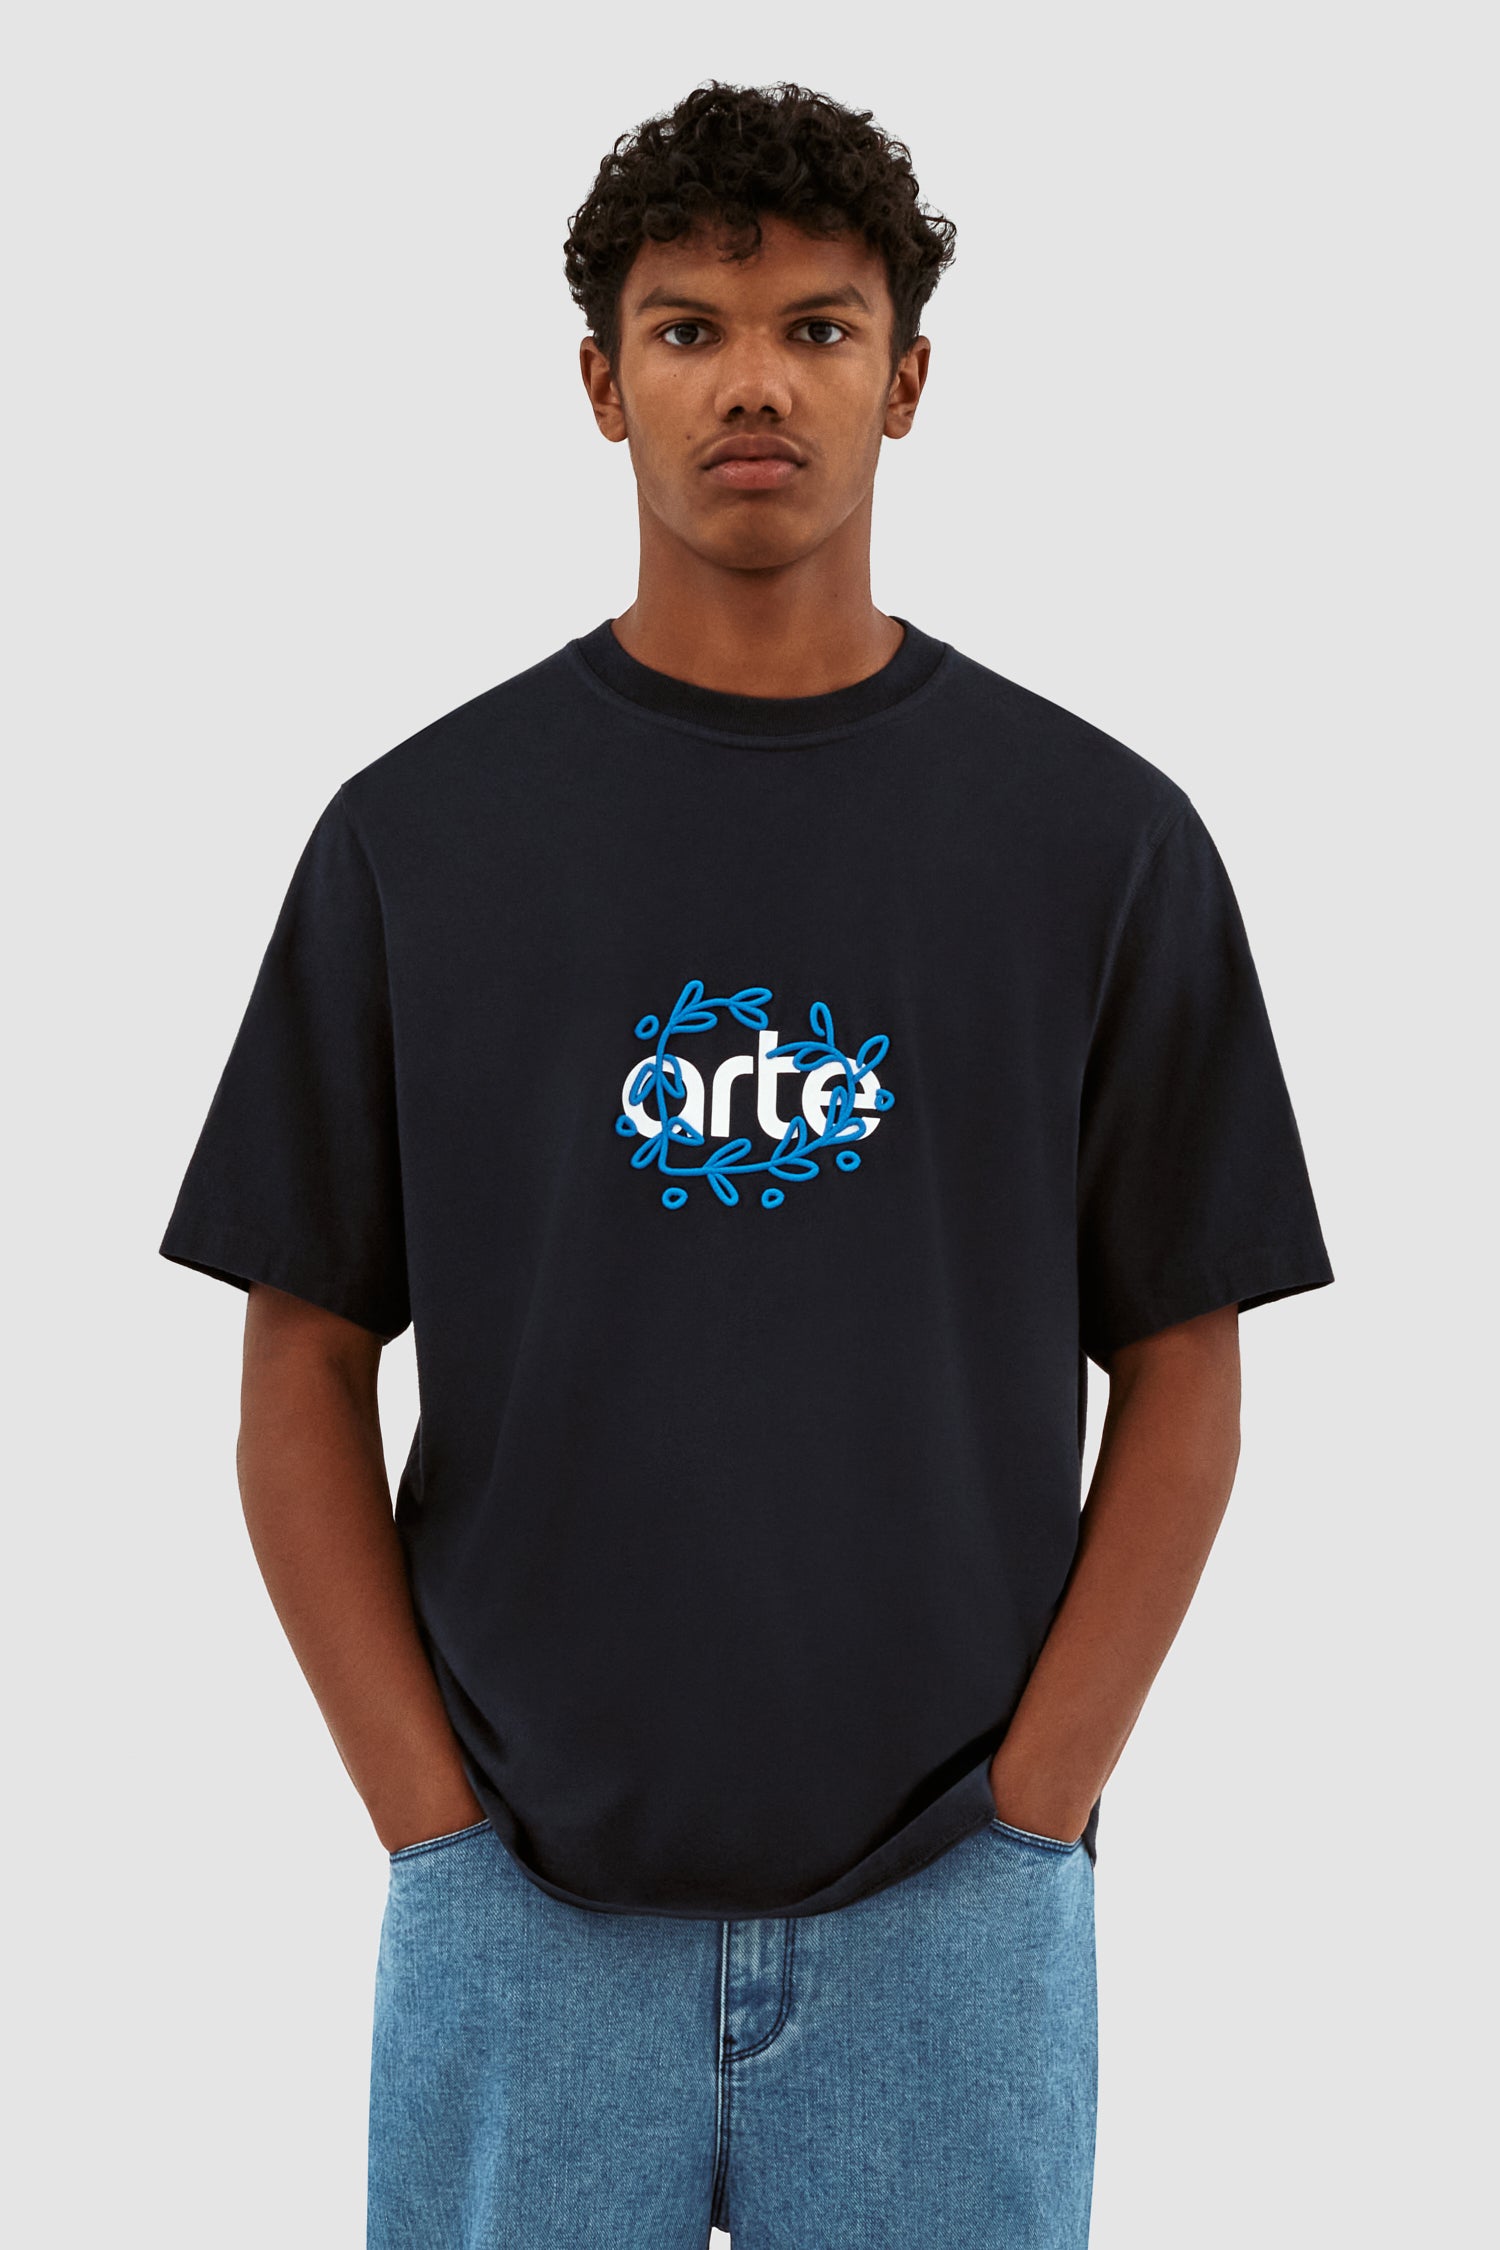 Teo Arte Front T-shirt - Navy